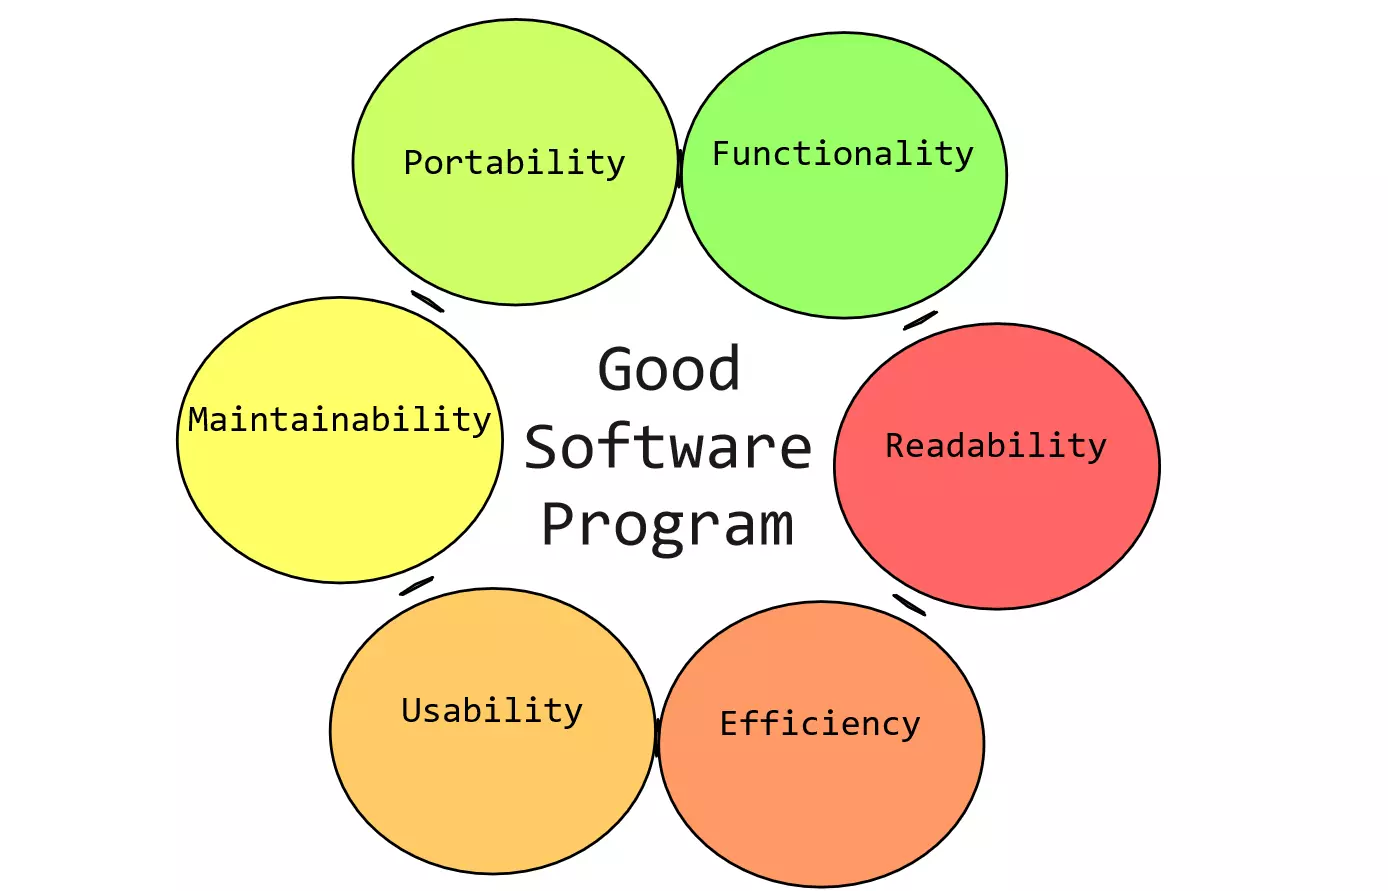 Good Software Program